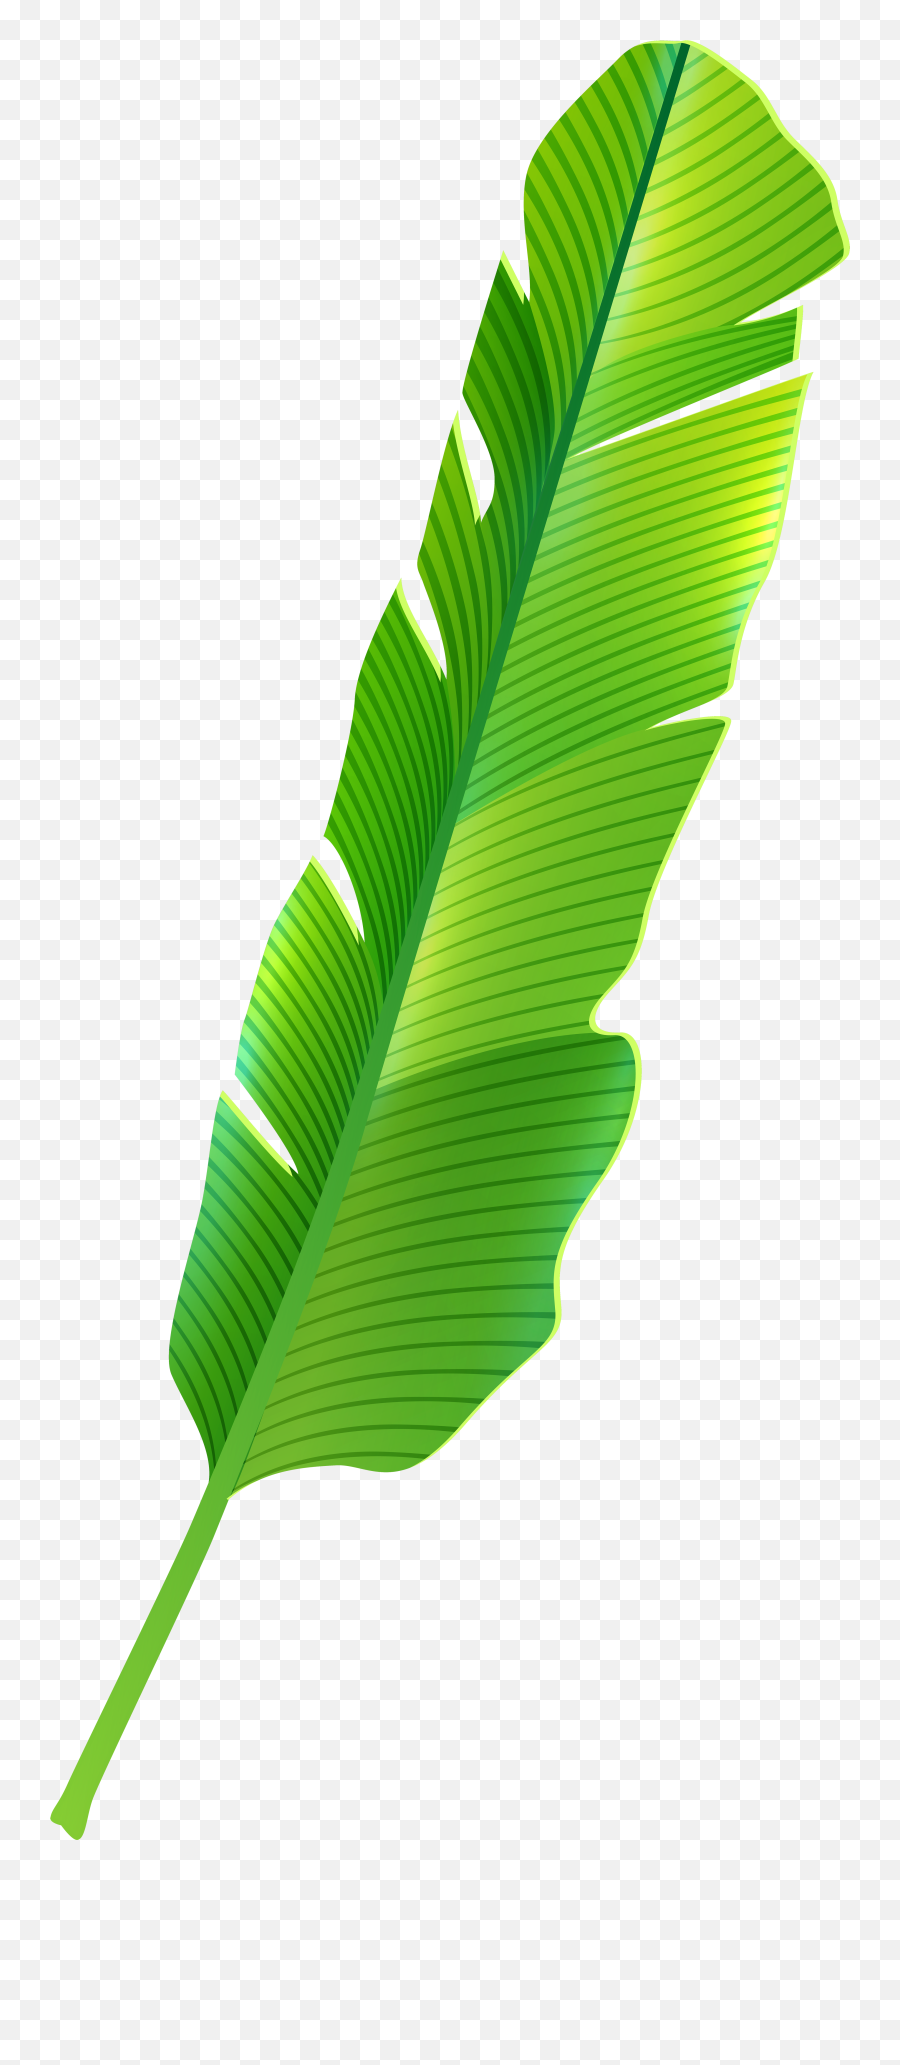 Leaf Clipart File Transparent Free For Download - Banana Leaf Png Clipart,Cannabis Leaf Png